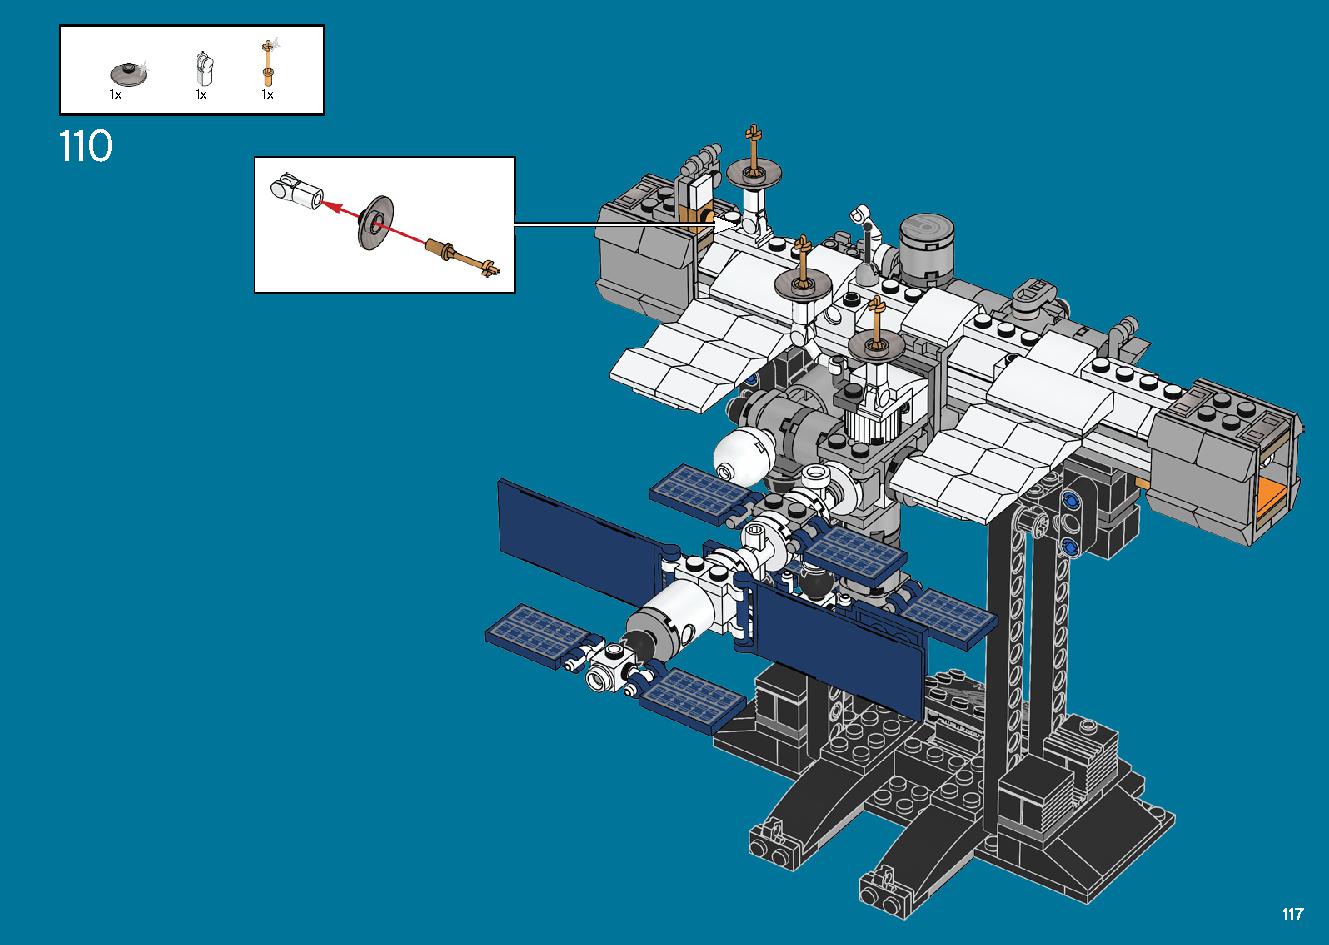 International Space Station 21321 レゴの商品情報 レゴの説明書・組立方法 117 page